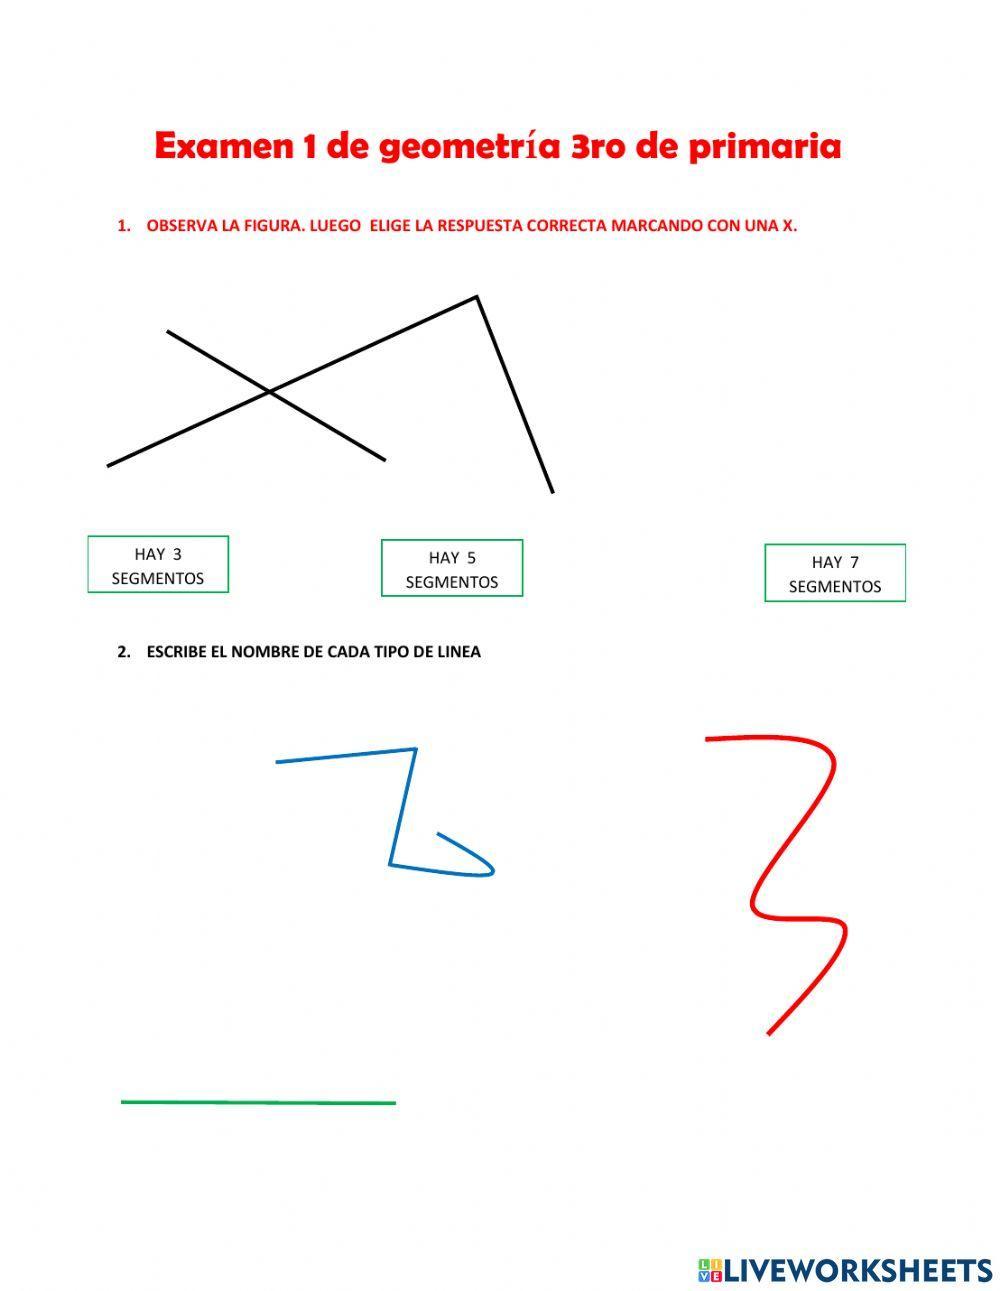 Examen 1 de geometria 3ro de primaria